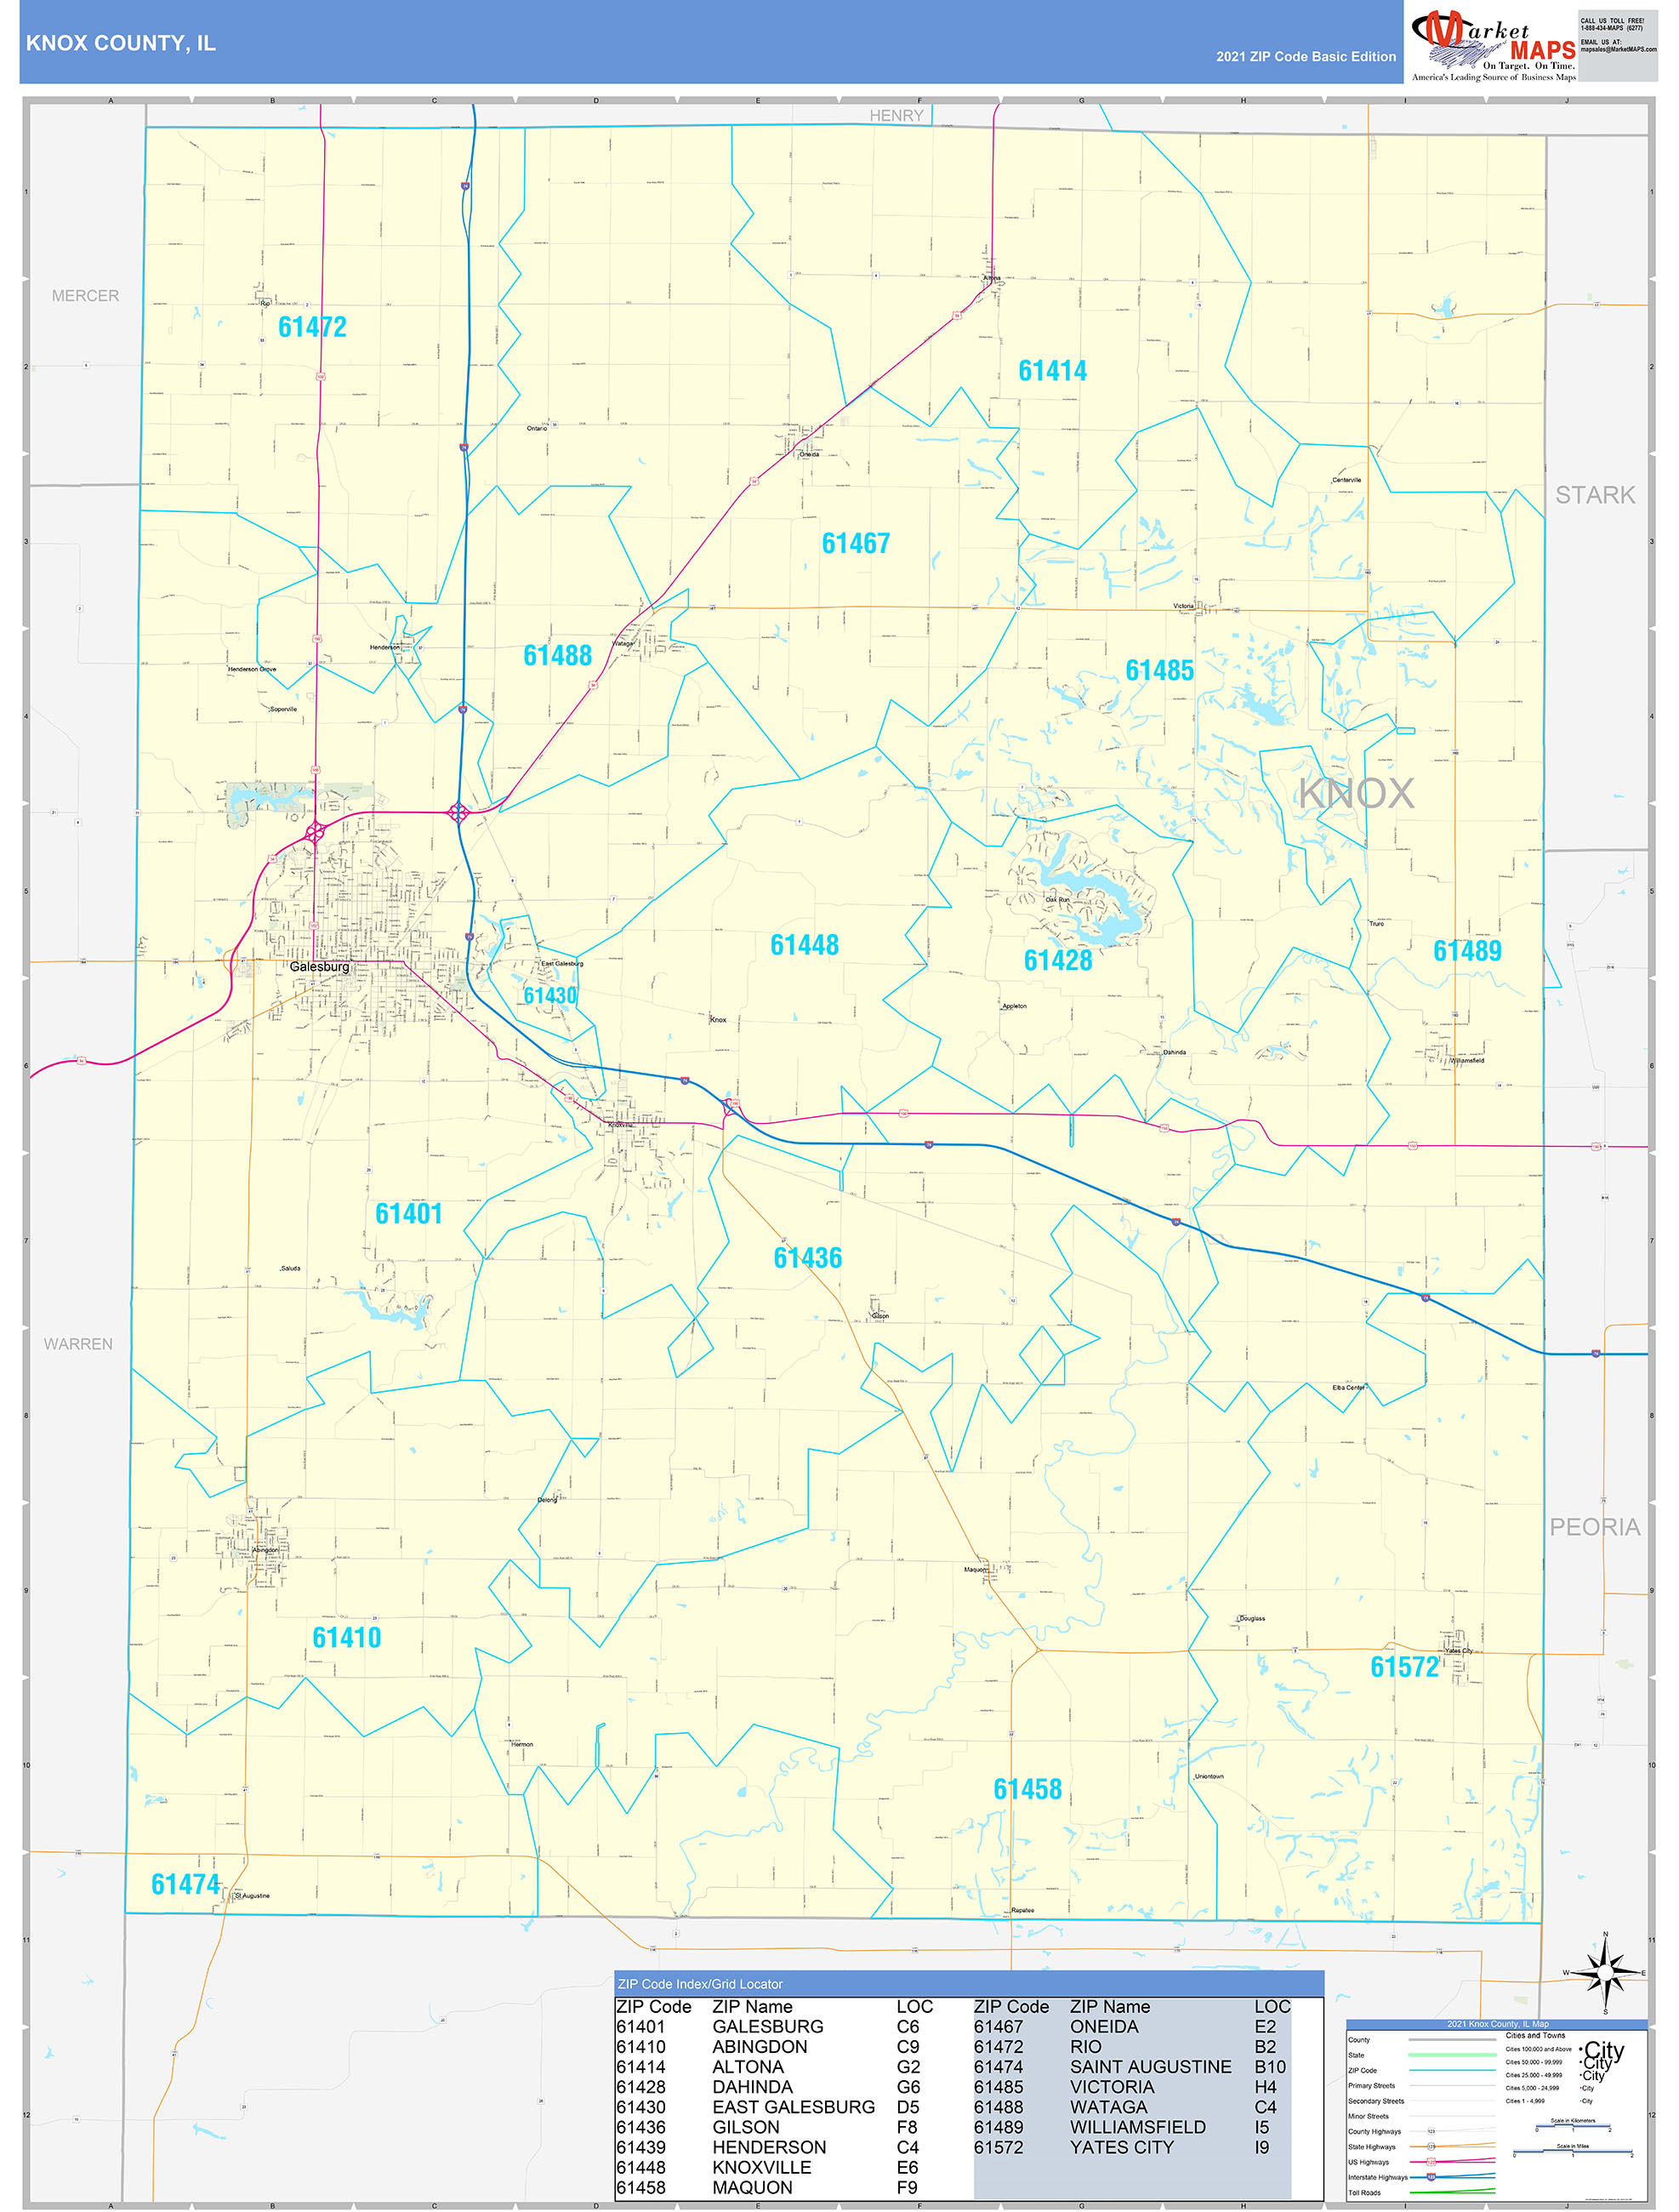 Knox County IL Zip Code Wall Map Basic Style by MarketMAPS MapSales